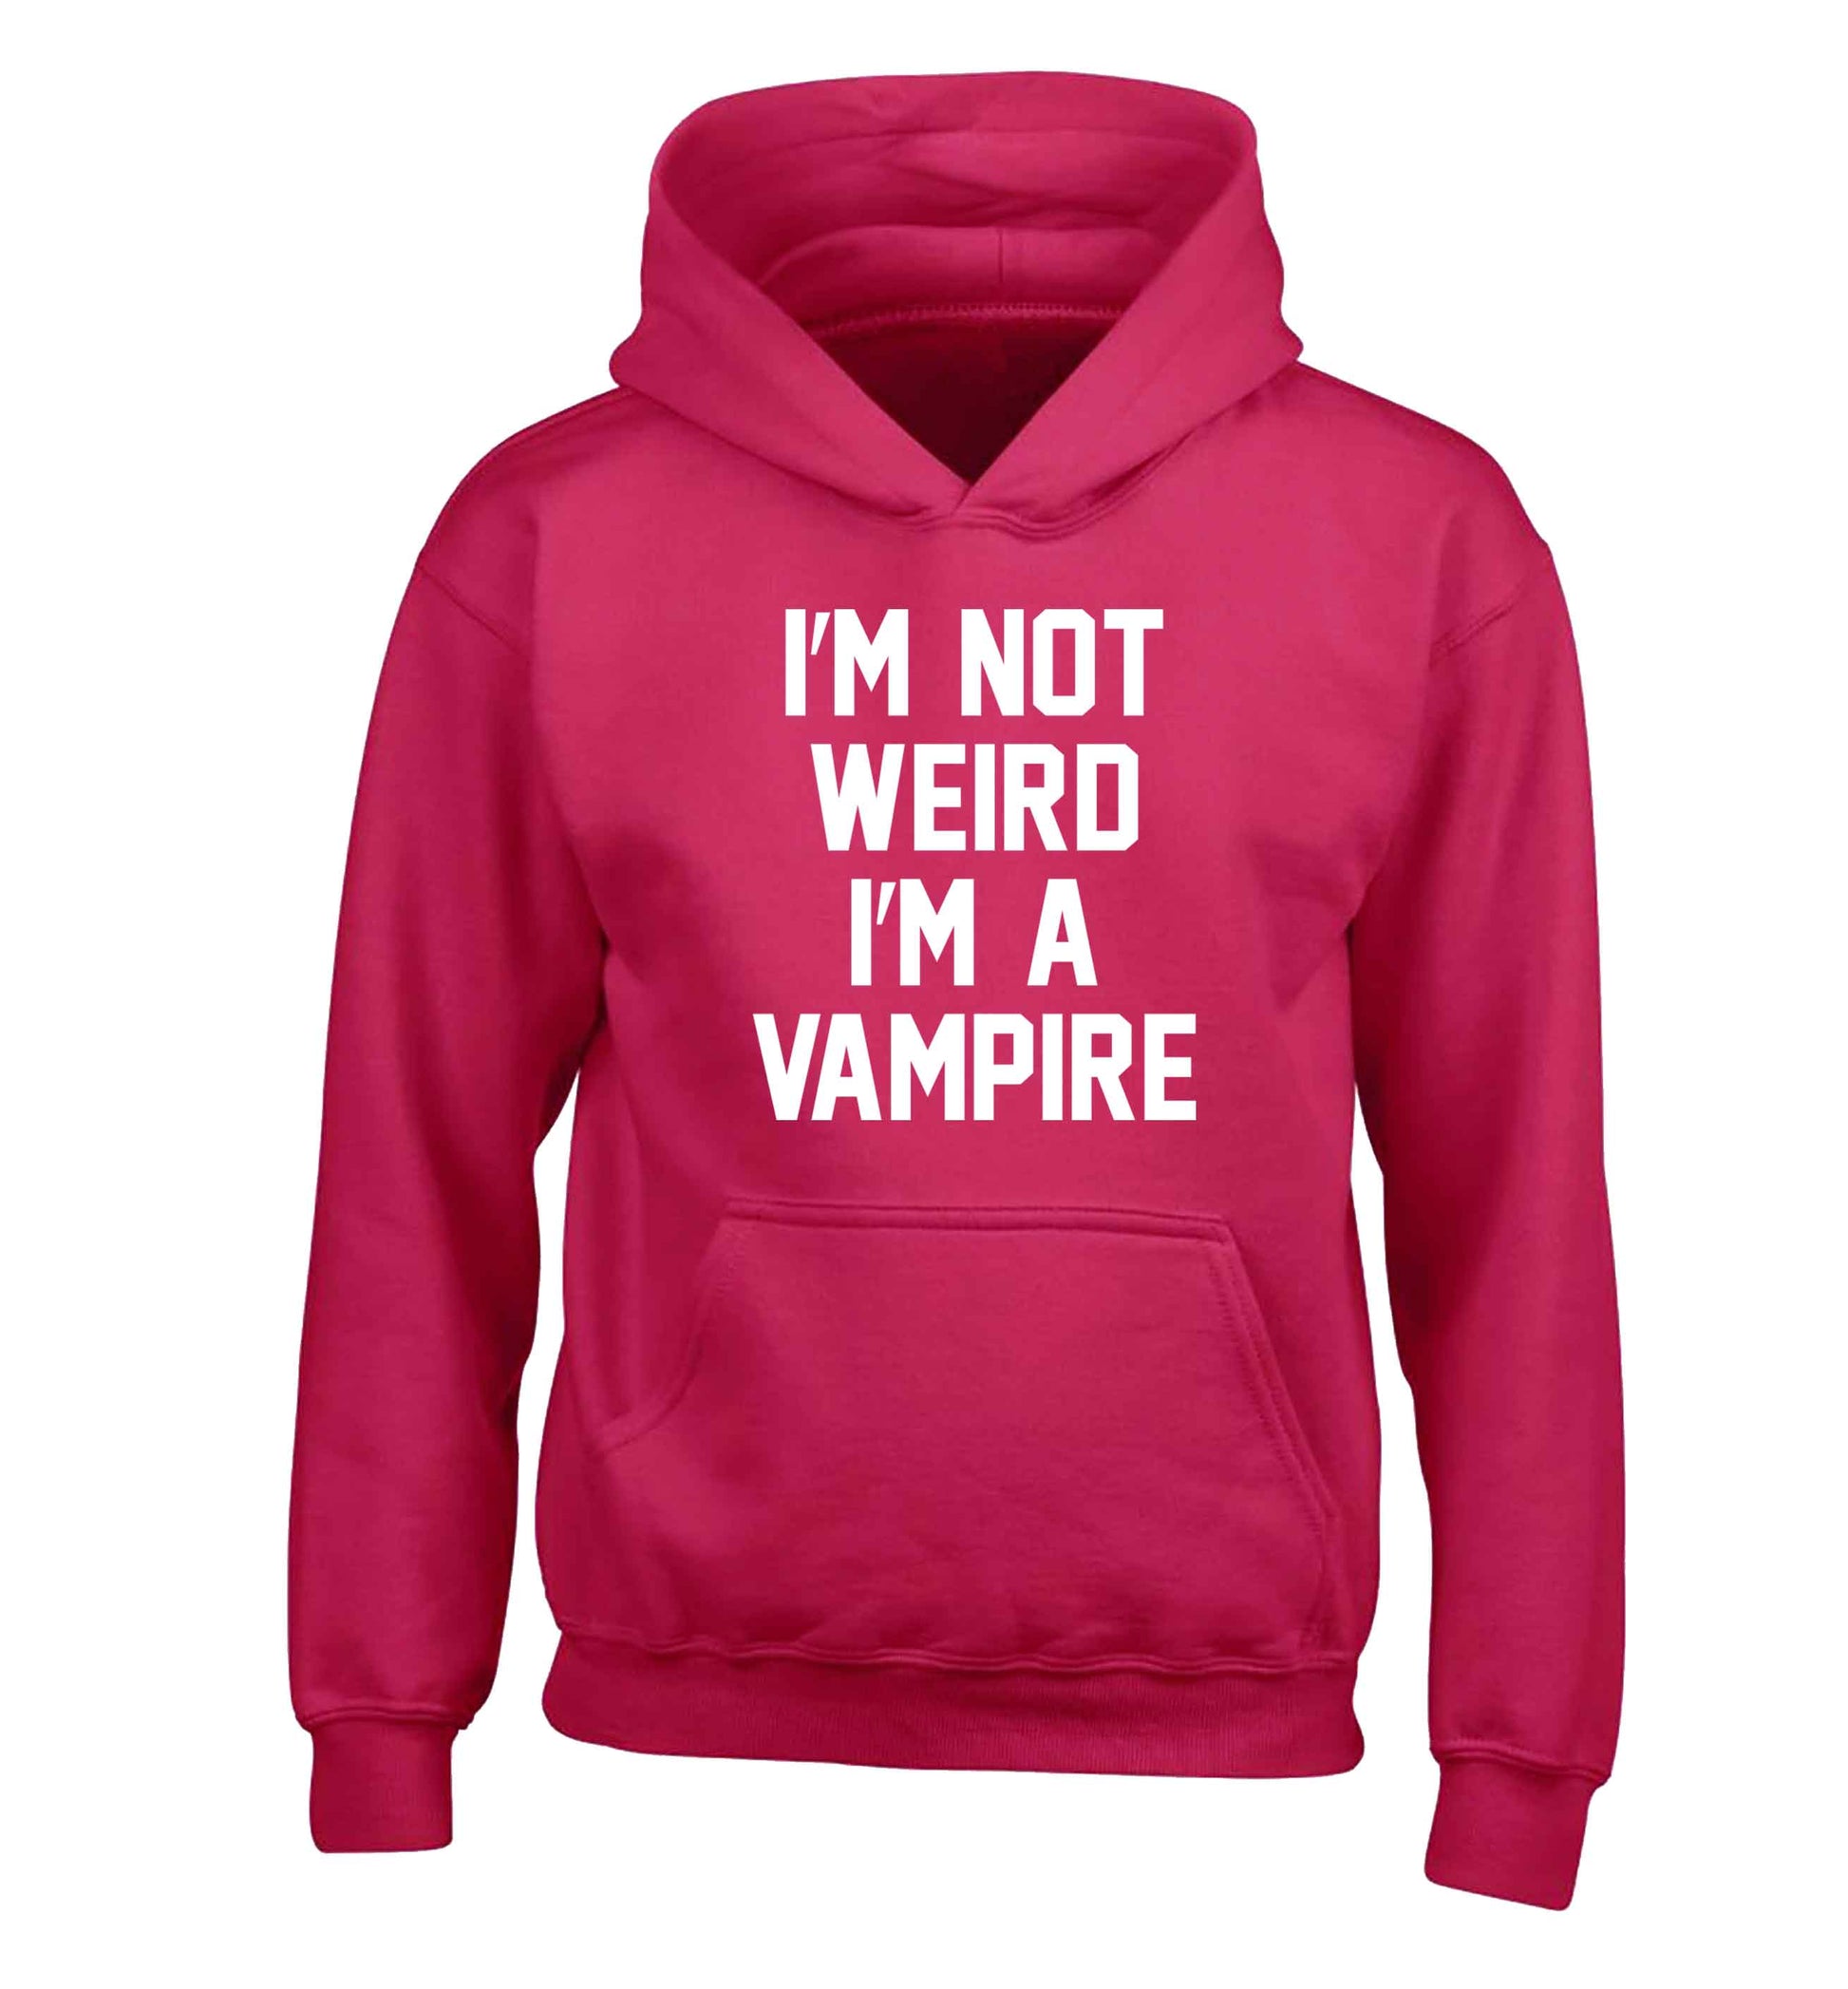 I'm not weird I'm a vampire children's pink hoodie 12-13 Years